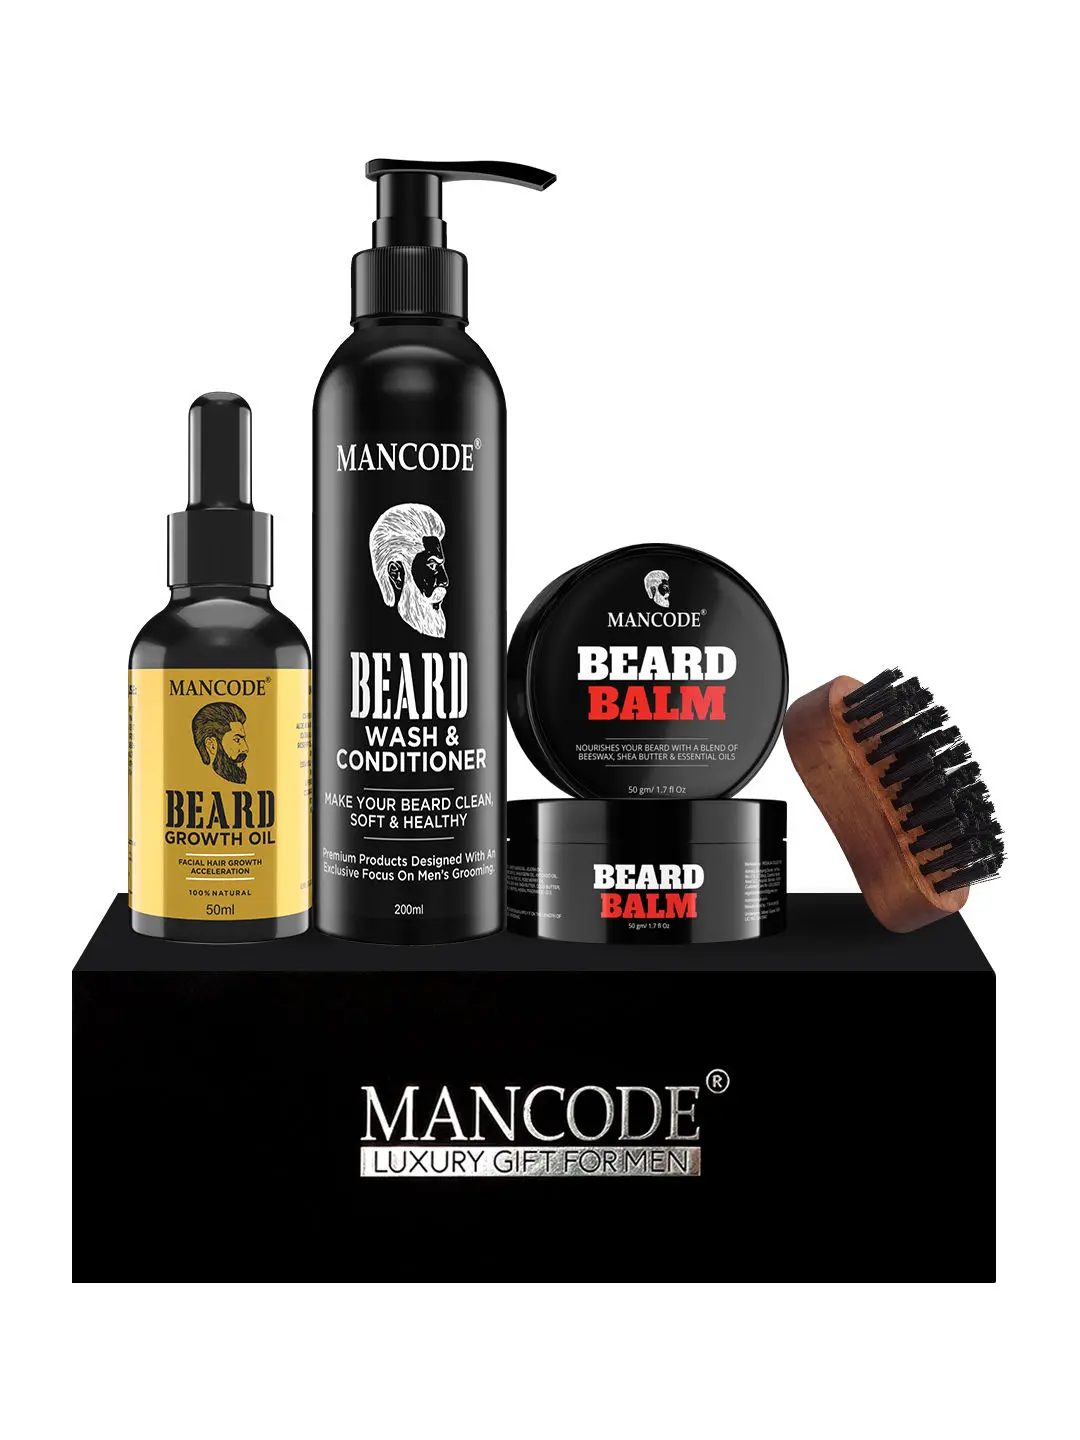 Mancode Gift Set for Men - Premium Luxury Beard Growth Kit (Beard Growth Oil + Beard Wash & Conditioner + Beard Balm + Beard Brush) Gift Set - 02